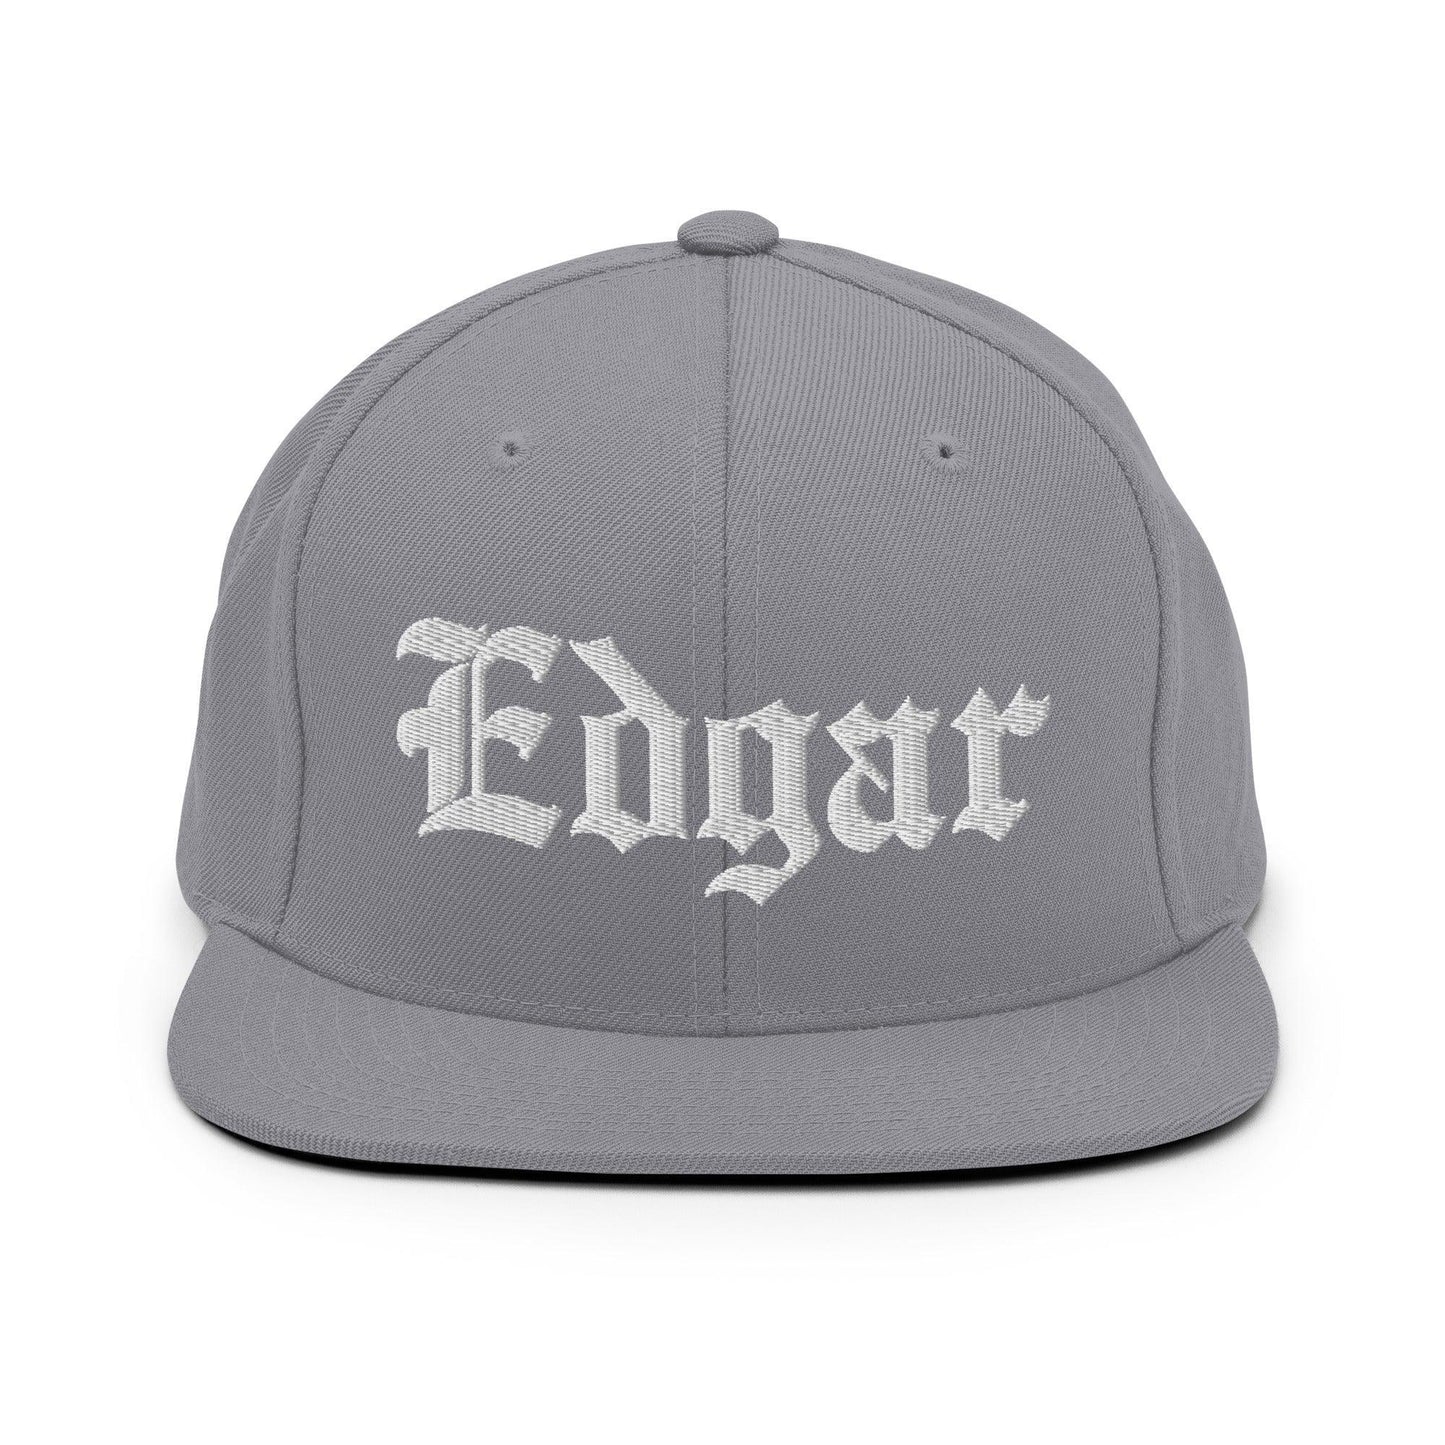 Edgar Old English Snapback Hat Silver